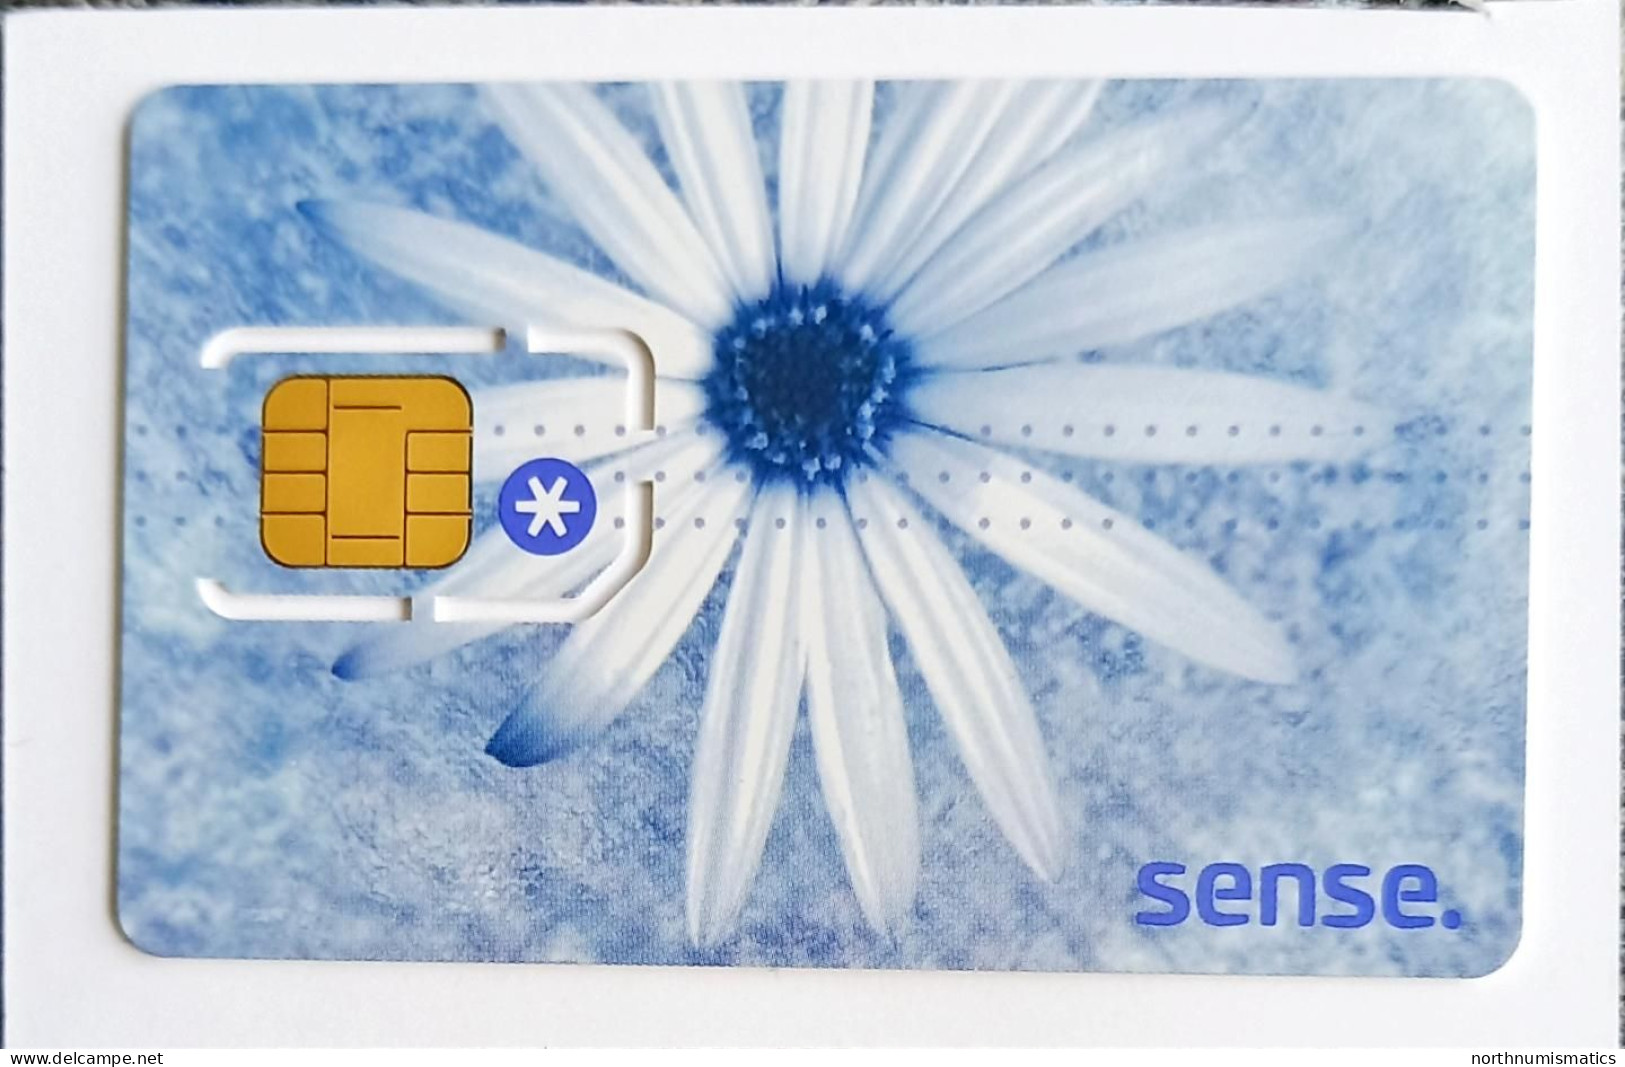 Sense Gsm Original Chip Sim Card - Lots - Collections